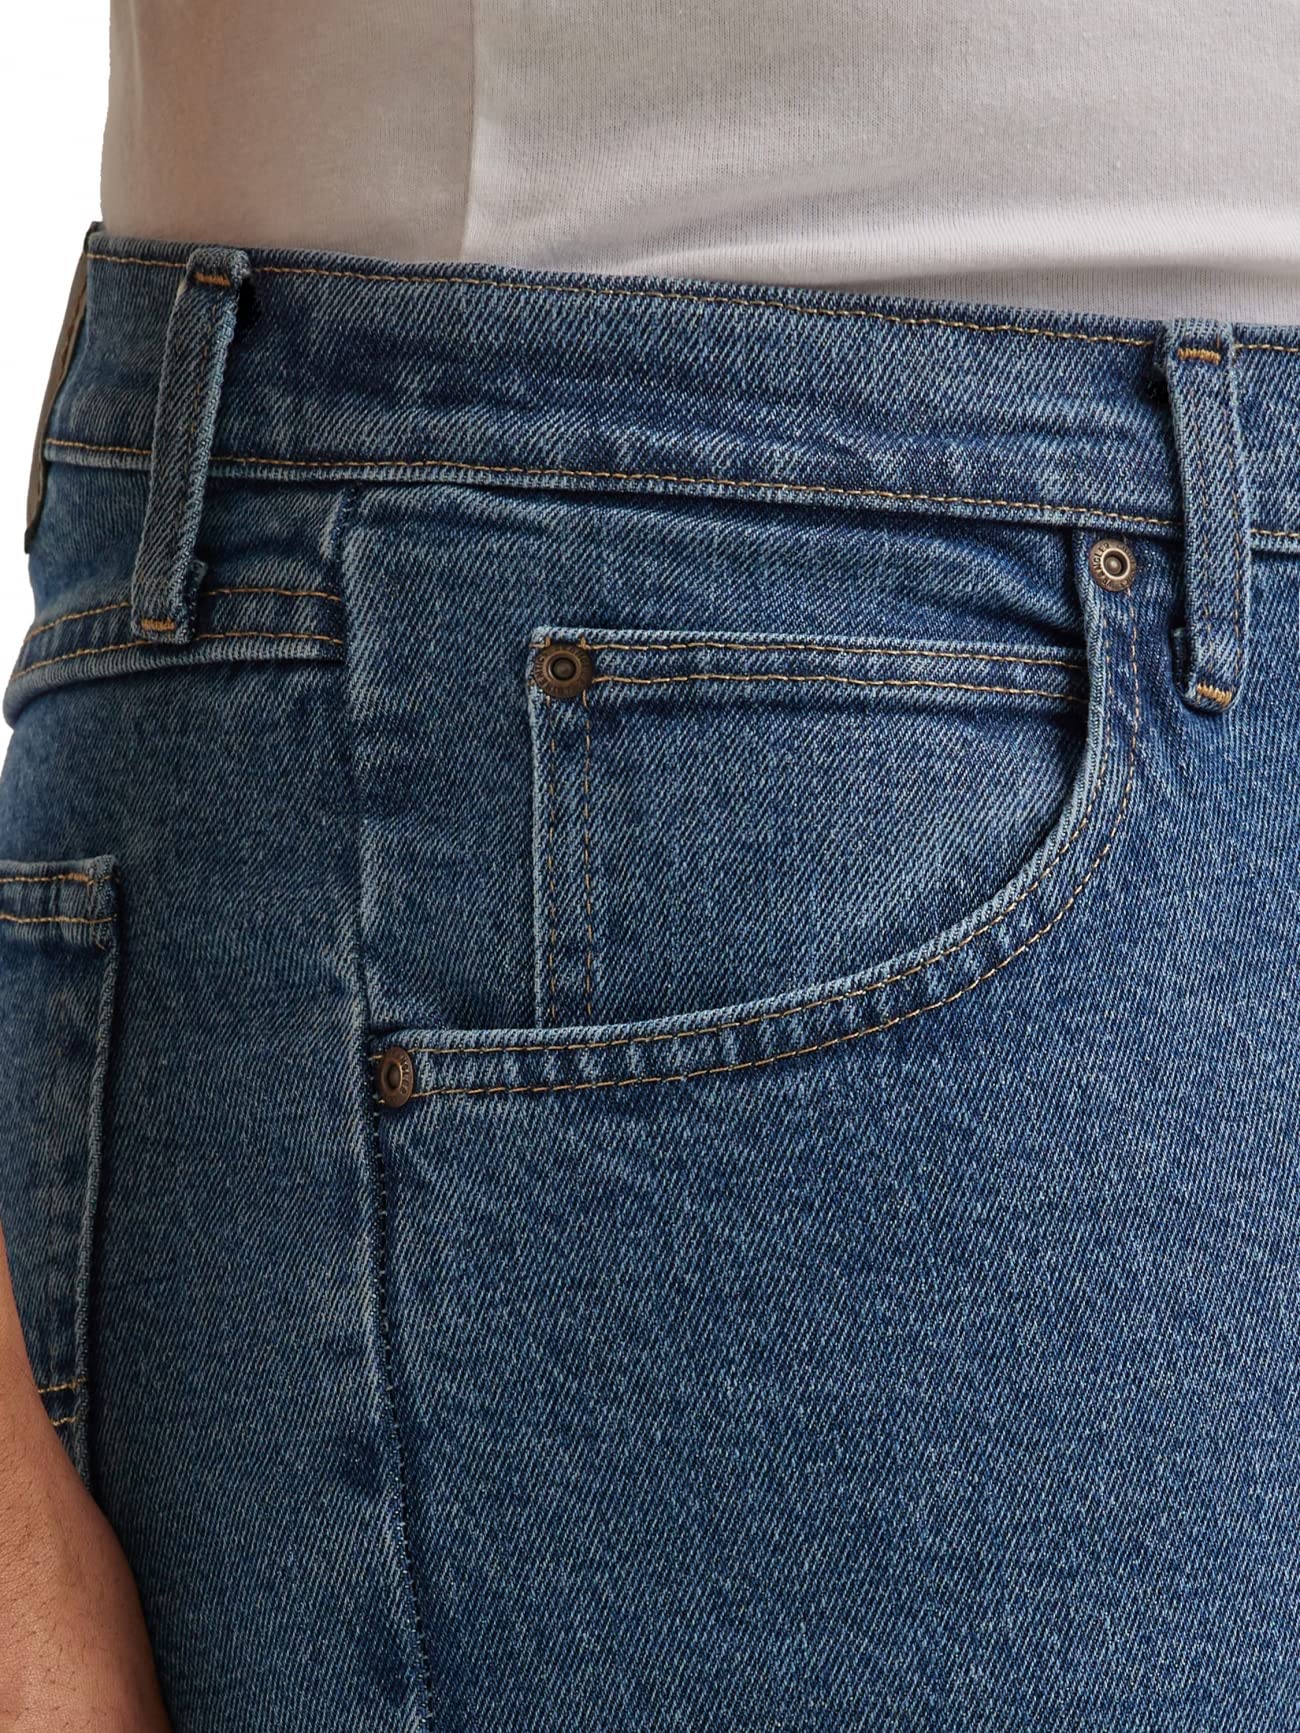 Wrangler Authentics Men's Classic 5-Pocket Relaxed Fit Jean, Dark Stonewash Flex, 36W x 30L